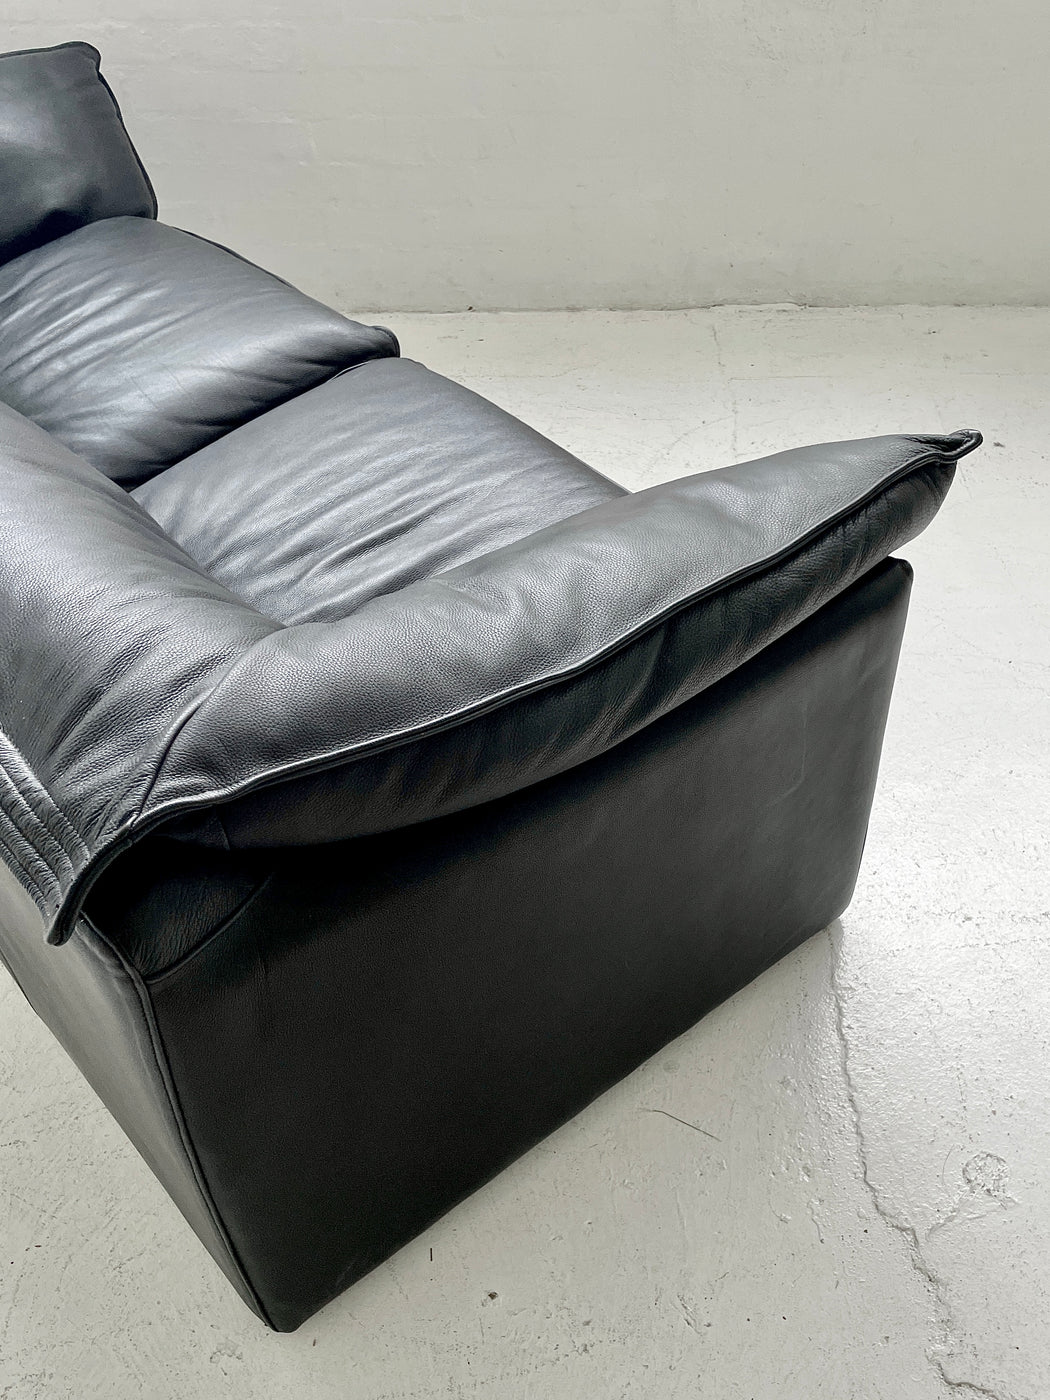 Jens Juul Eilersen 'Arizona' Leather Sofa